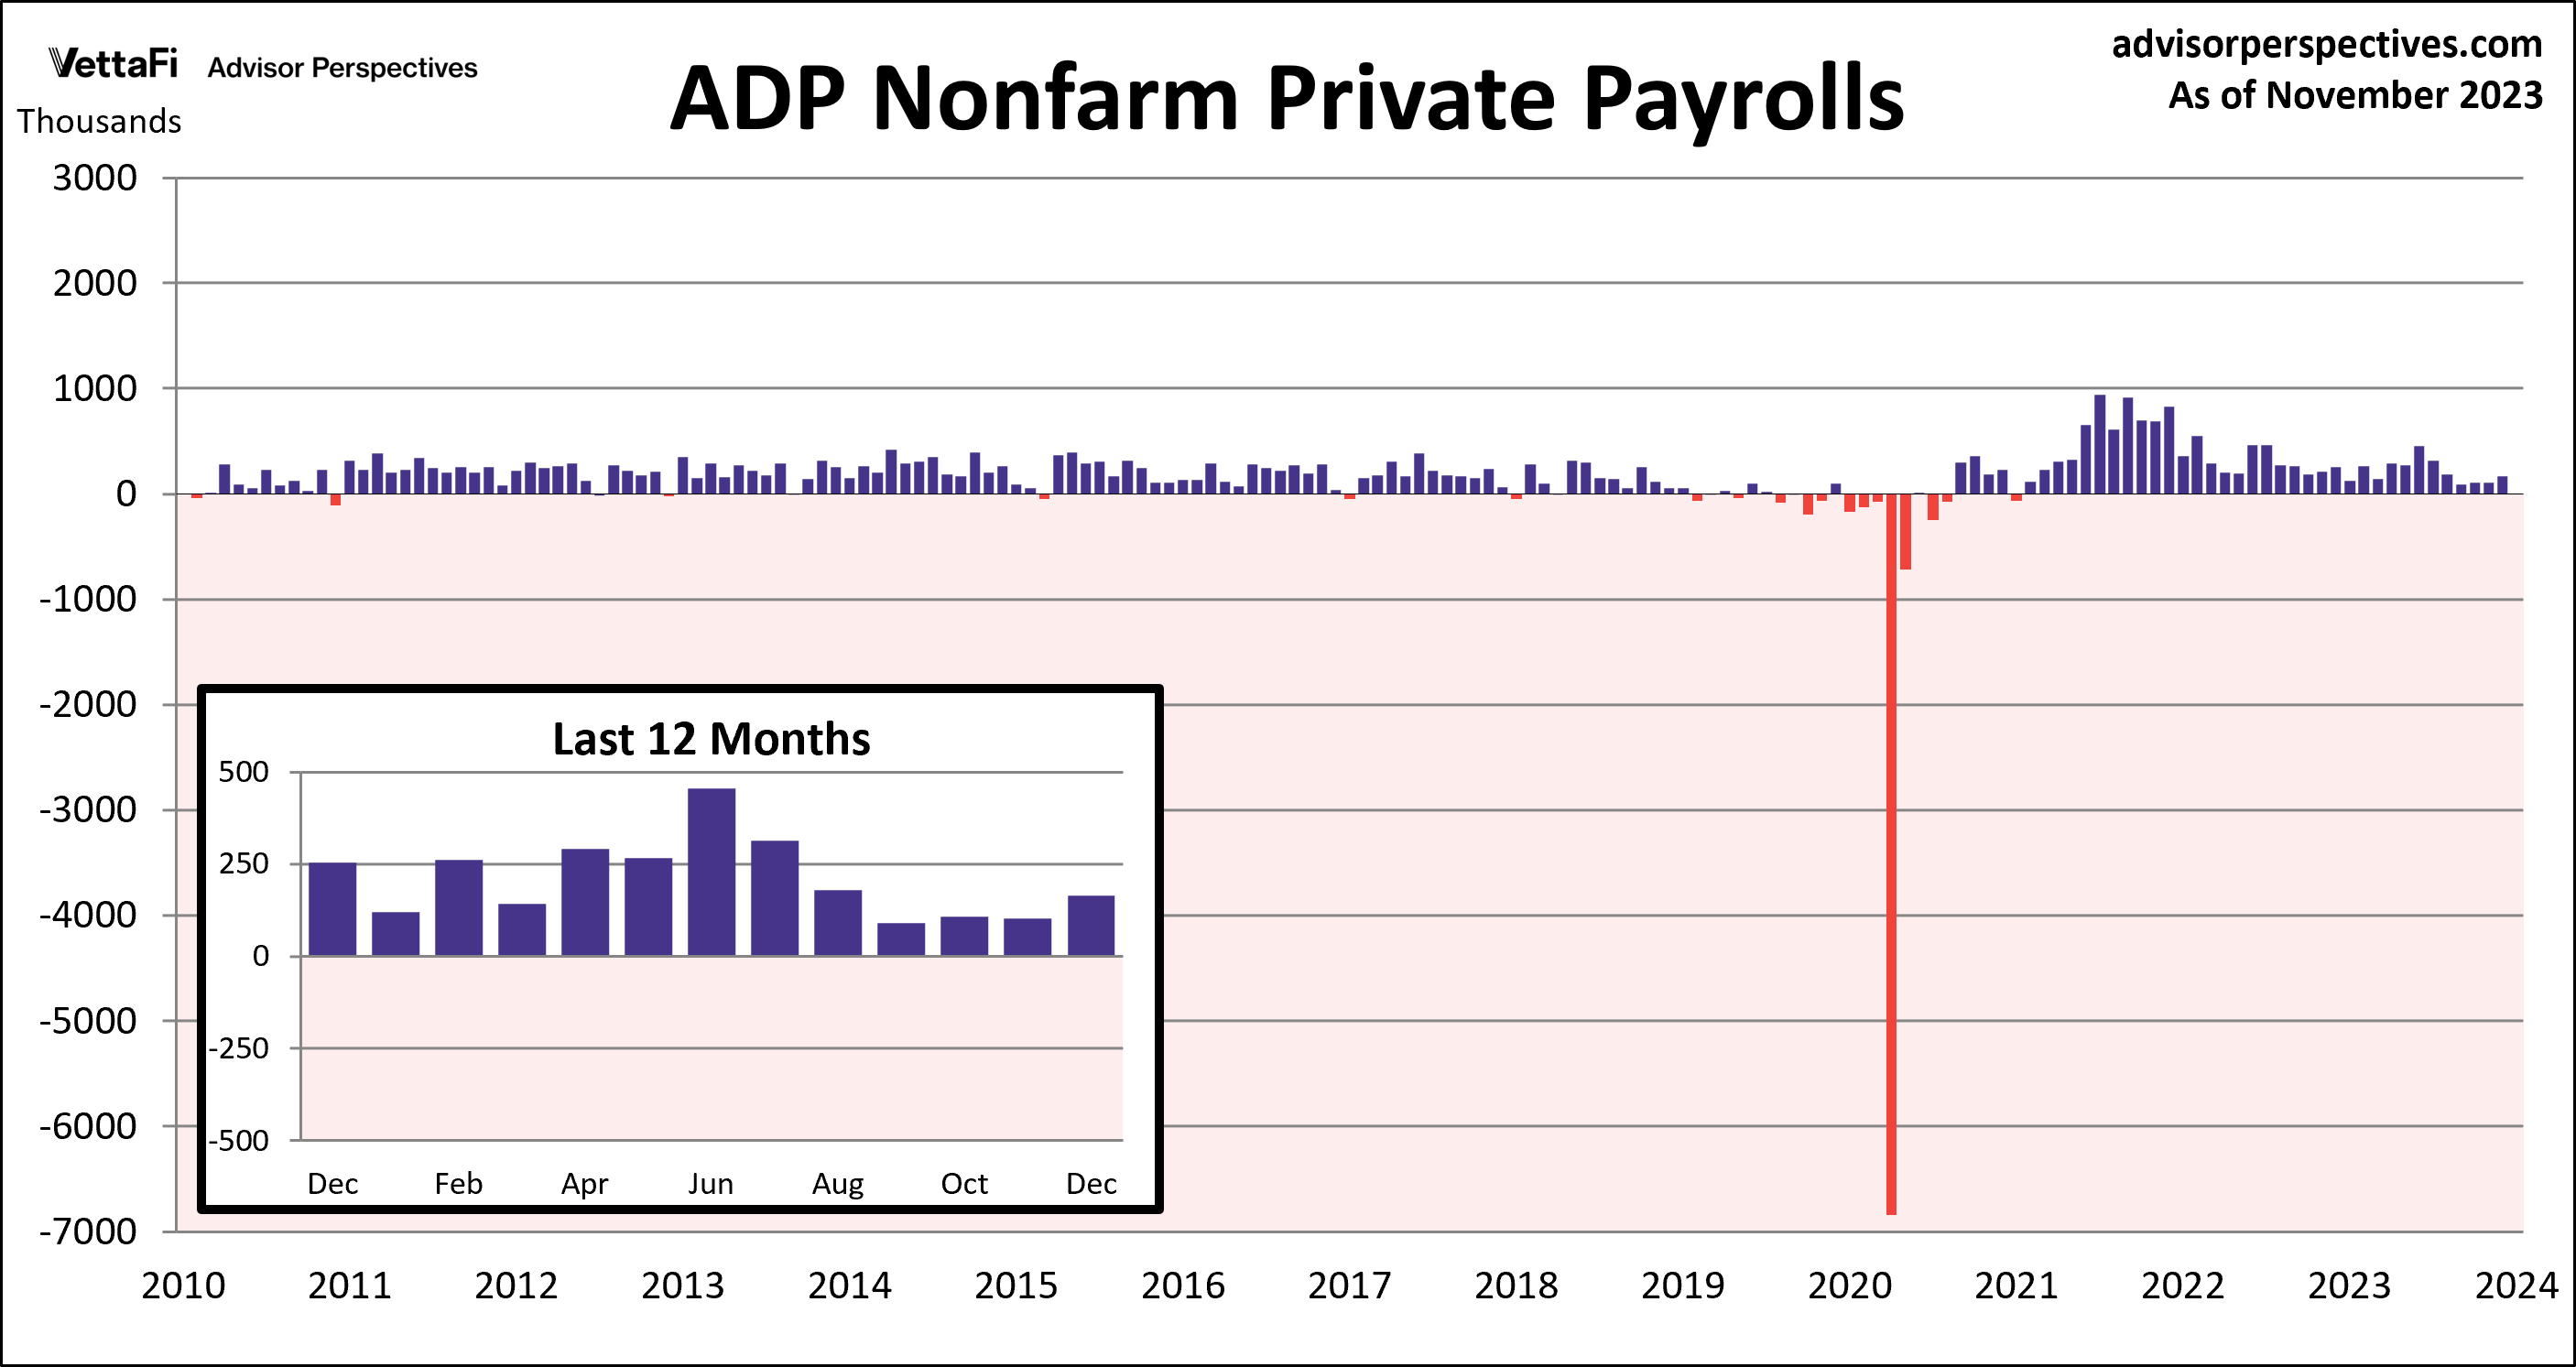 ADP Nonfarm Private Payrolls